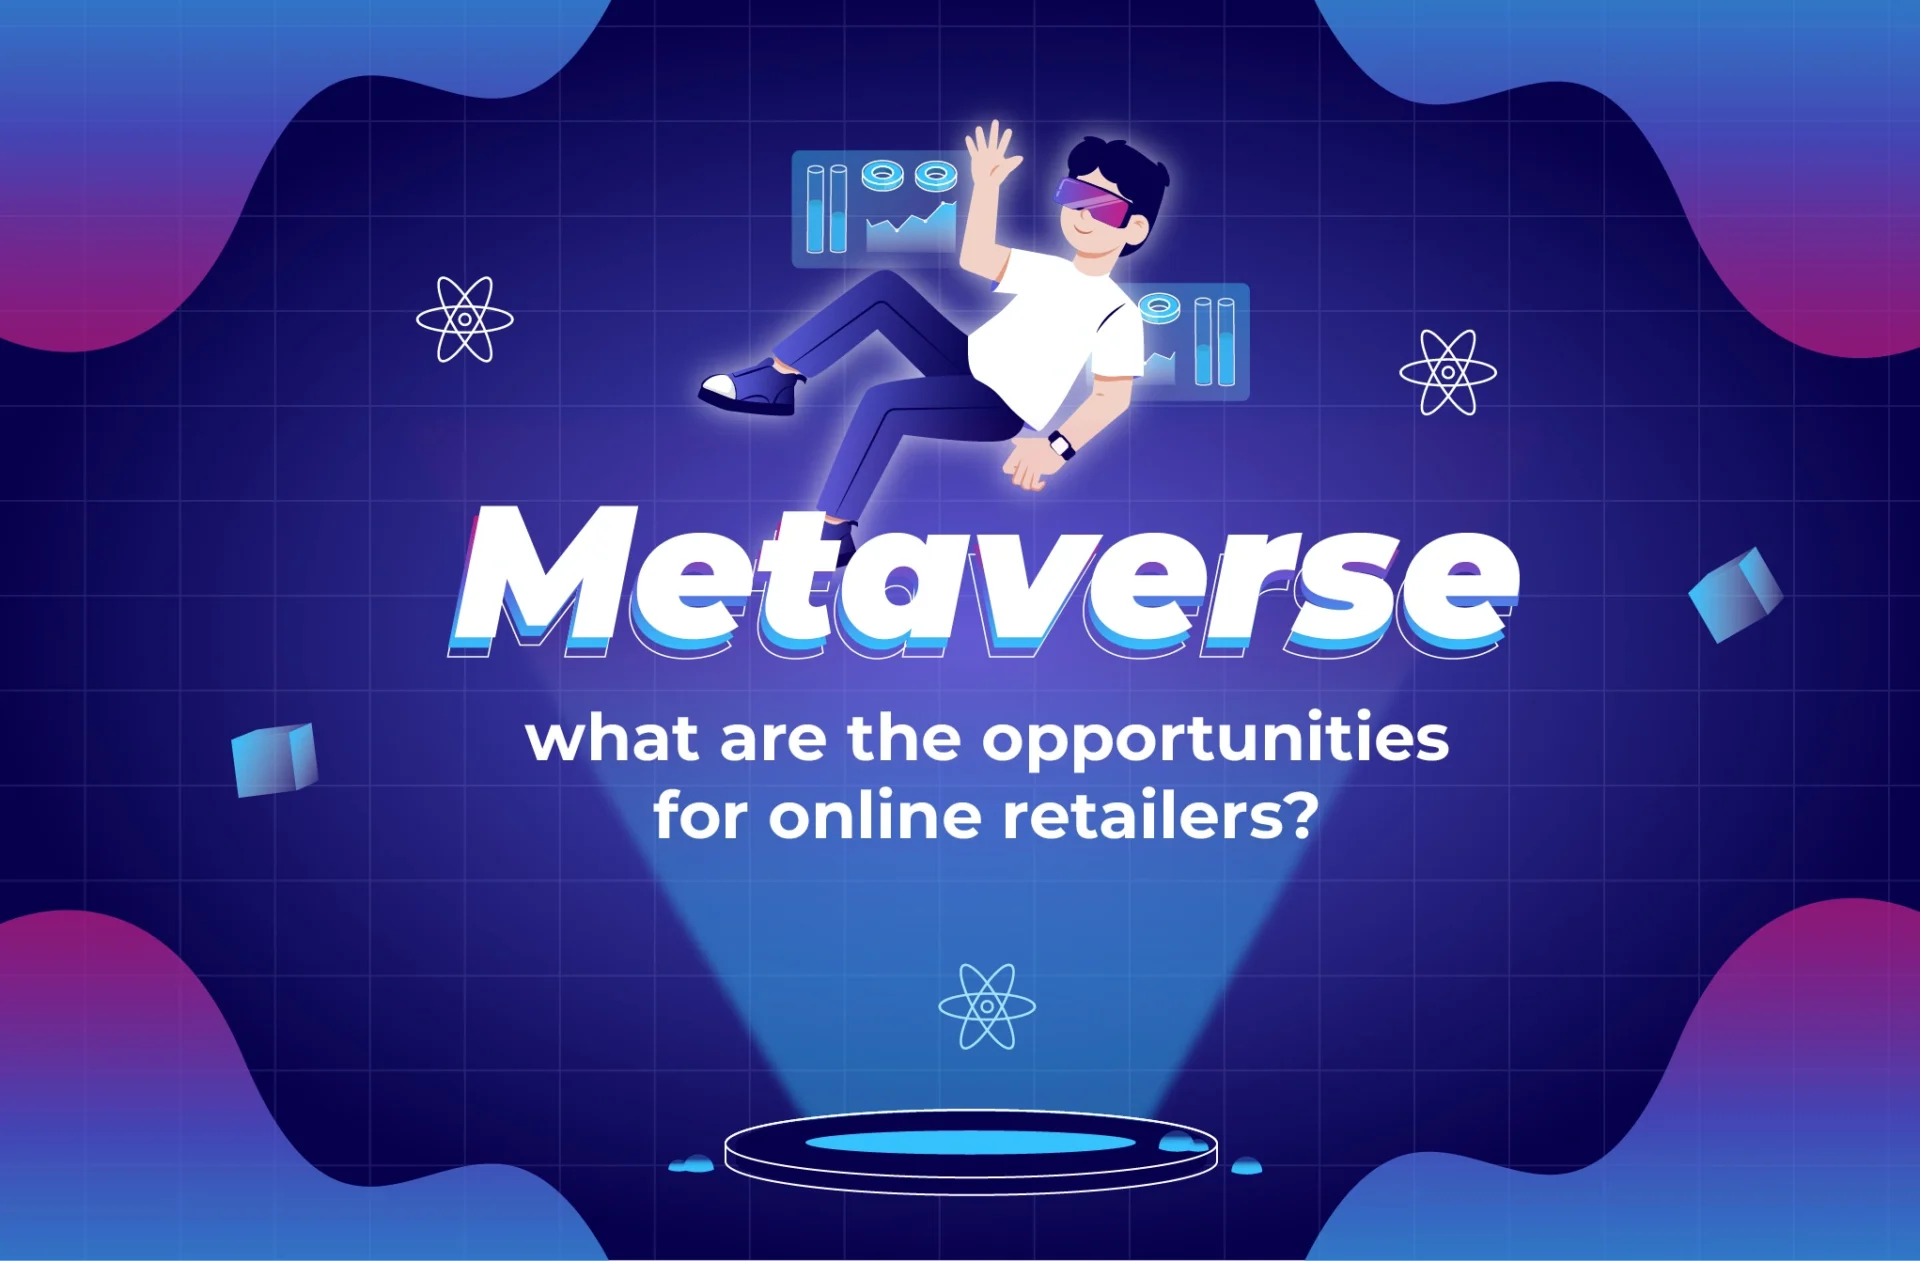 Metaverse opportunities for e-commerce merchants